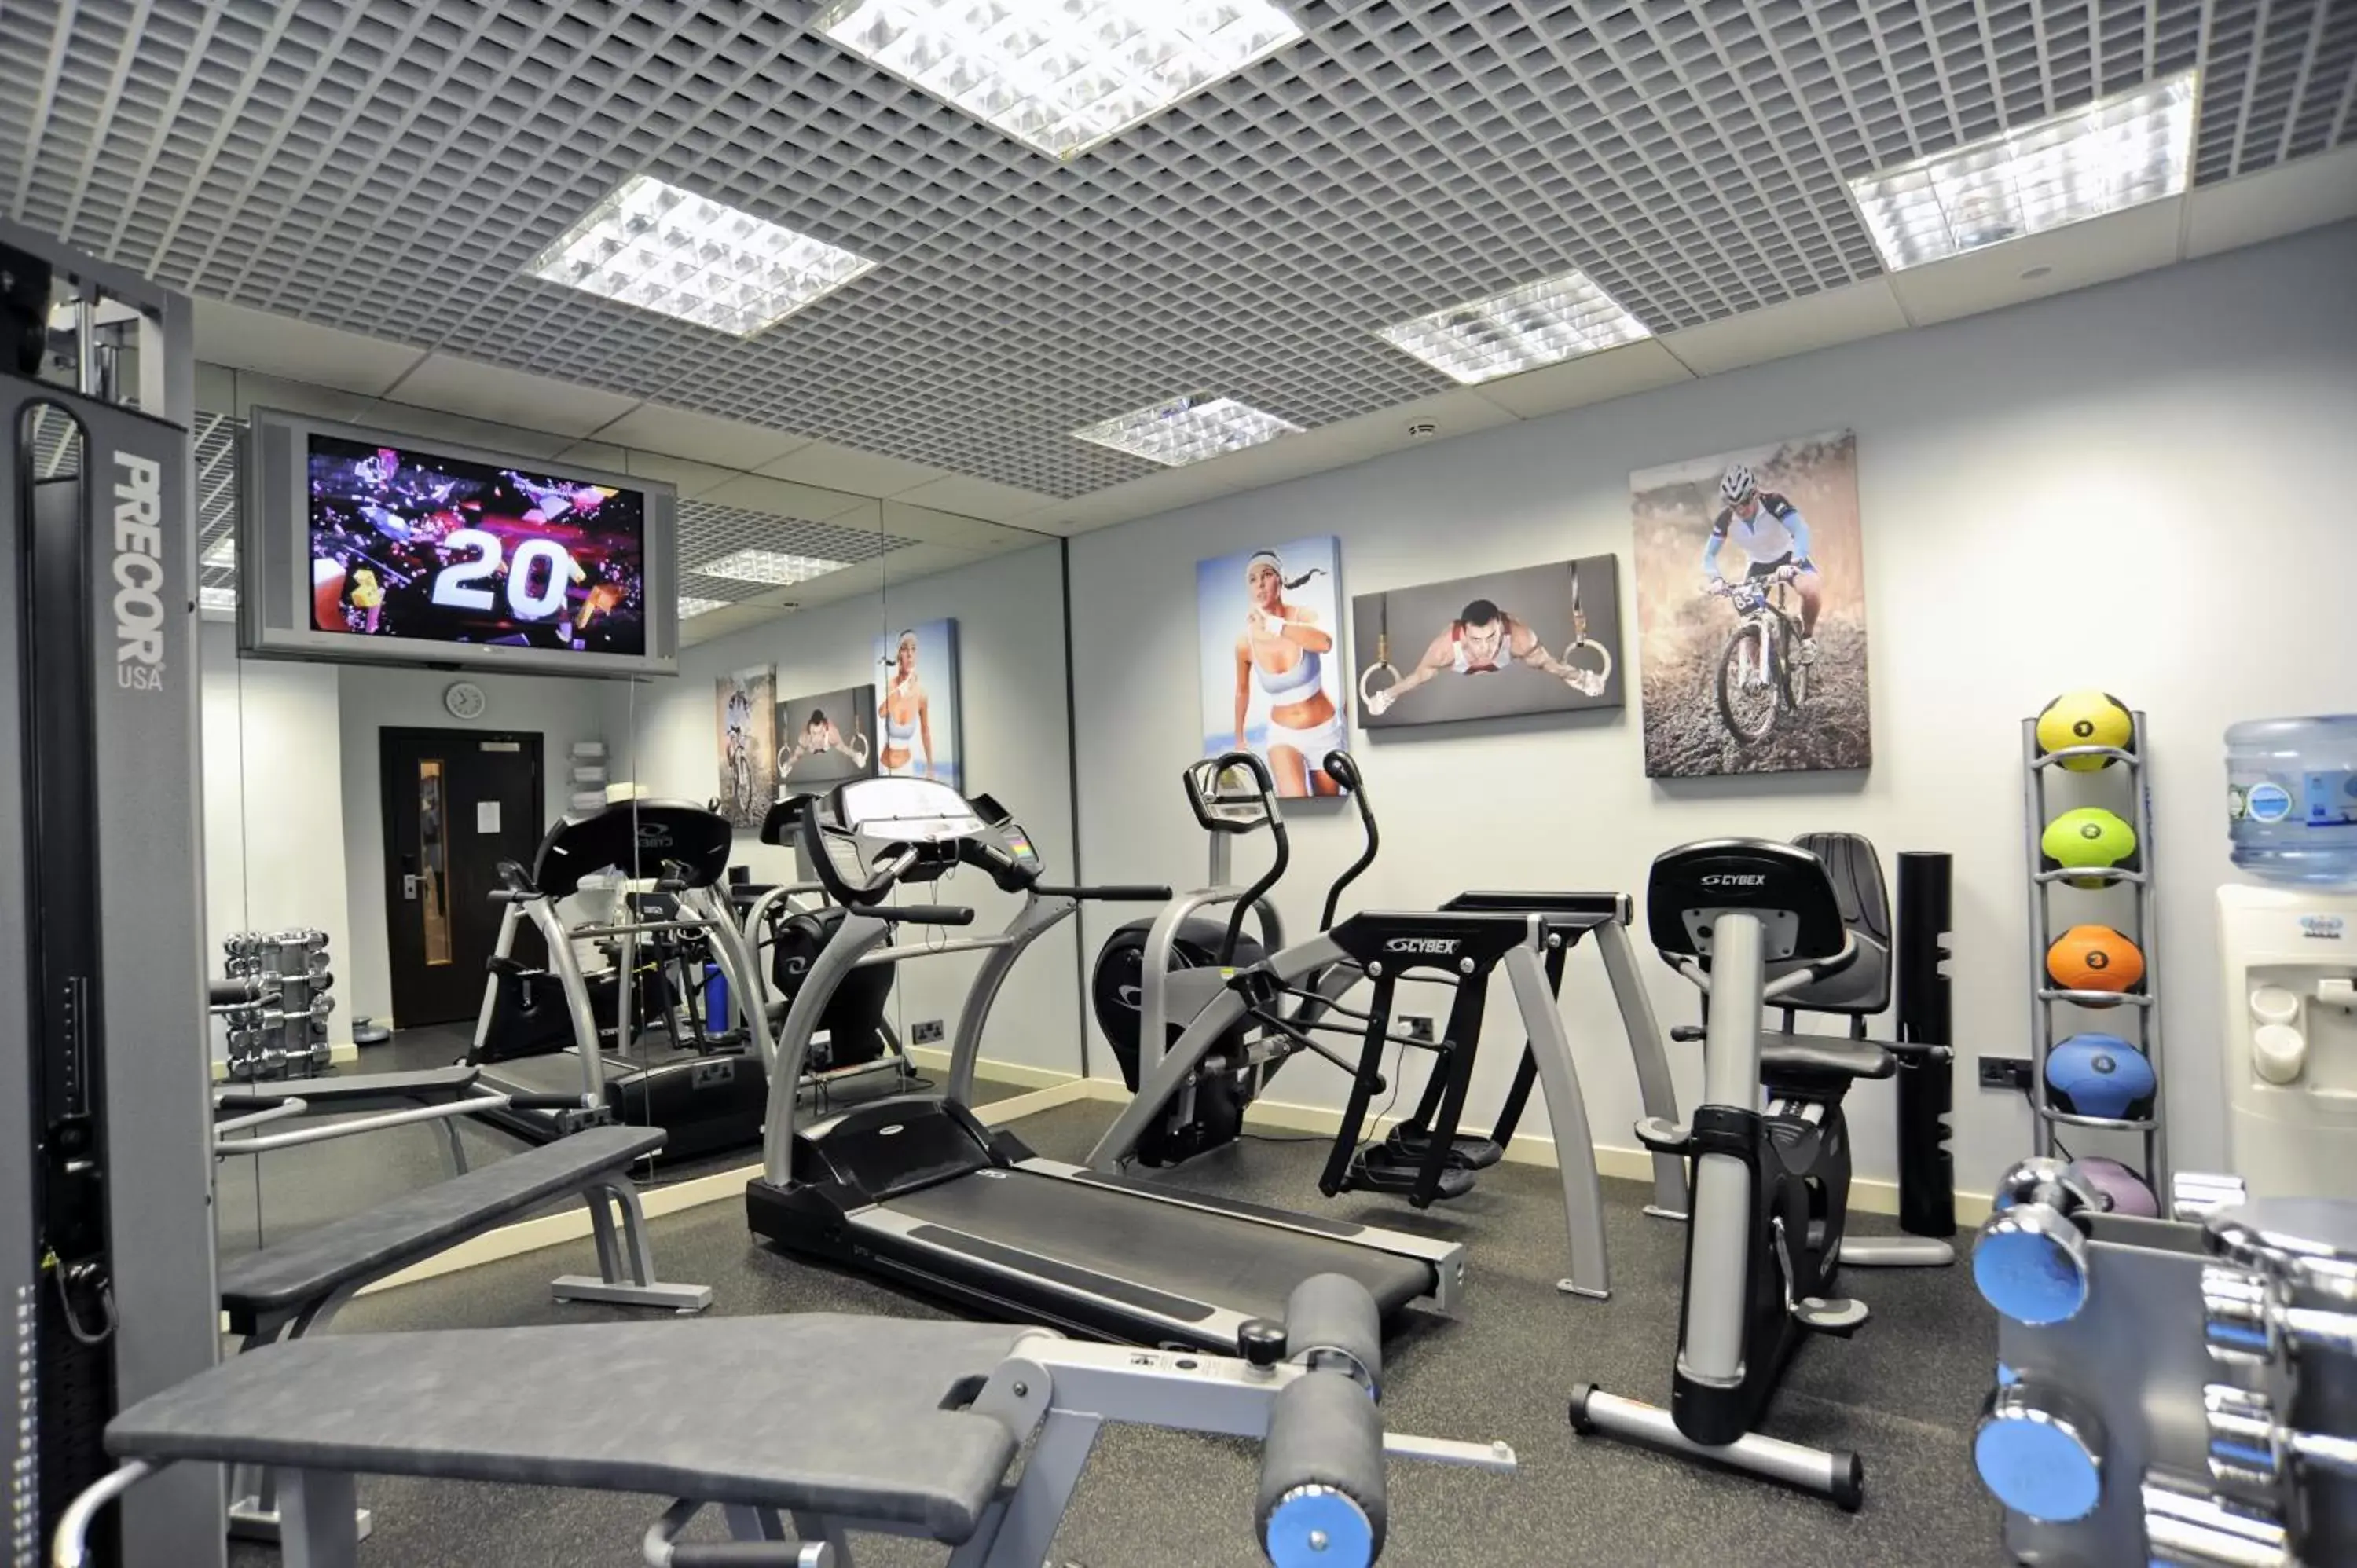 Fitness centre/facilities, Fitness Center/Facilities in Mercure London Paddington Hotel